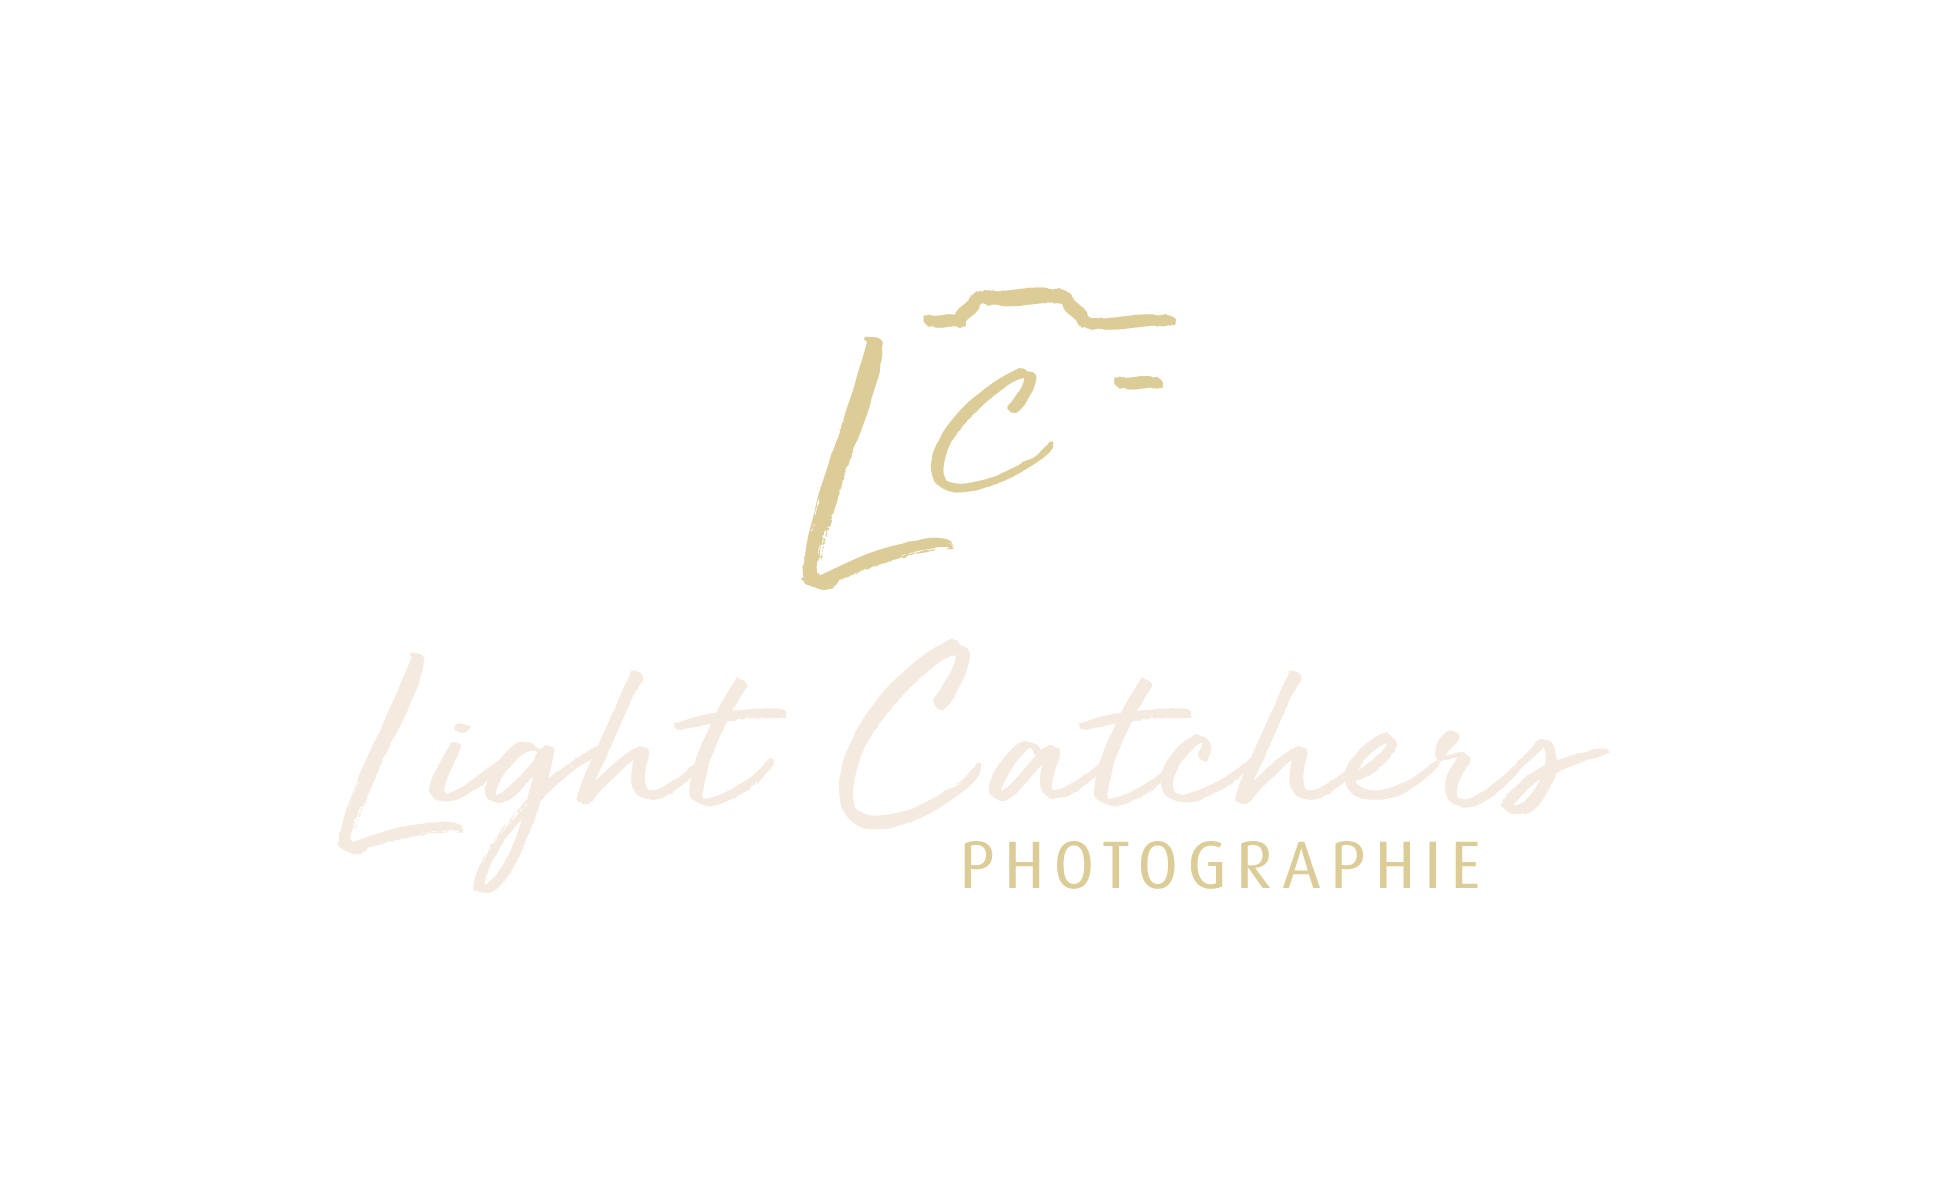 Light Catchers Photographie